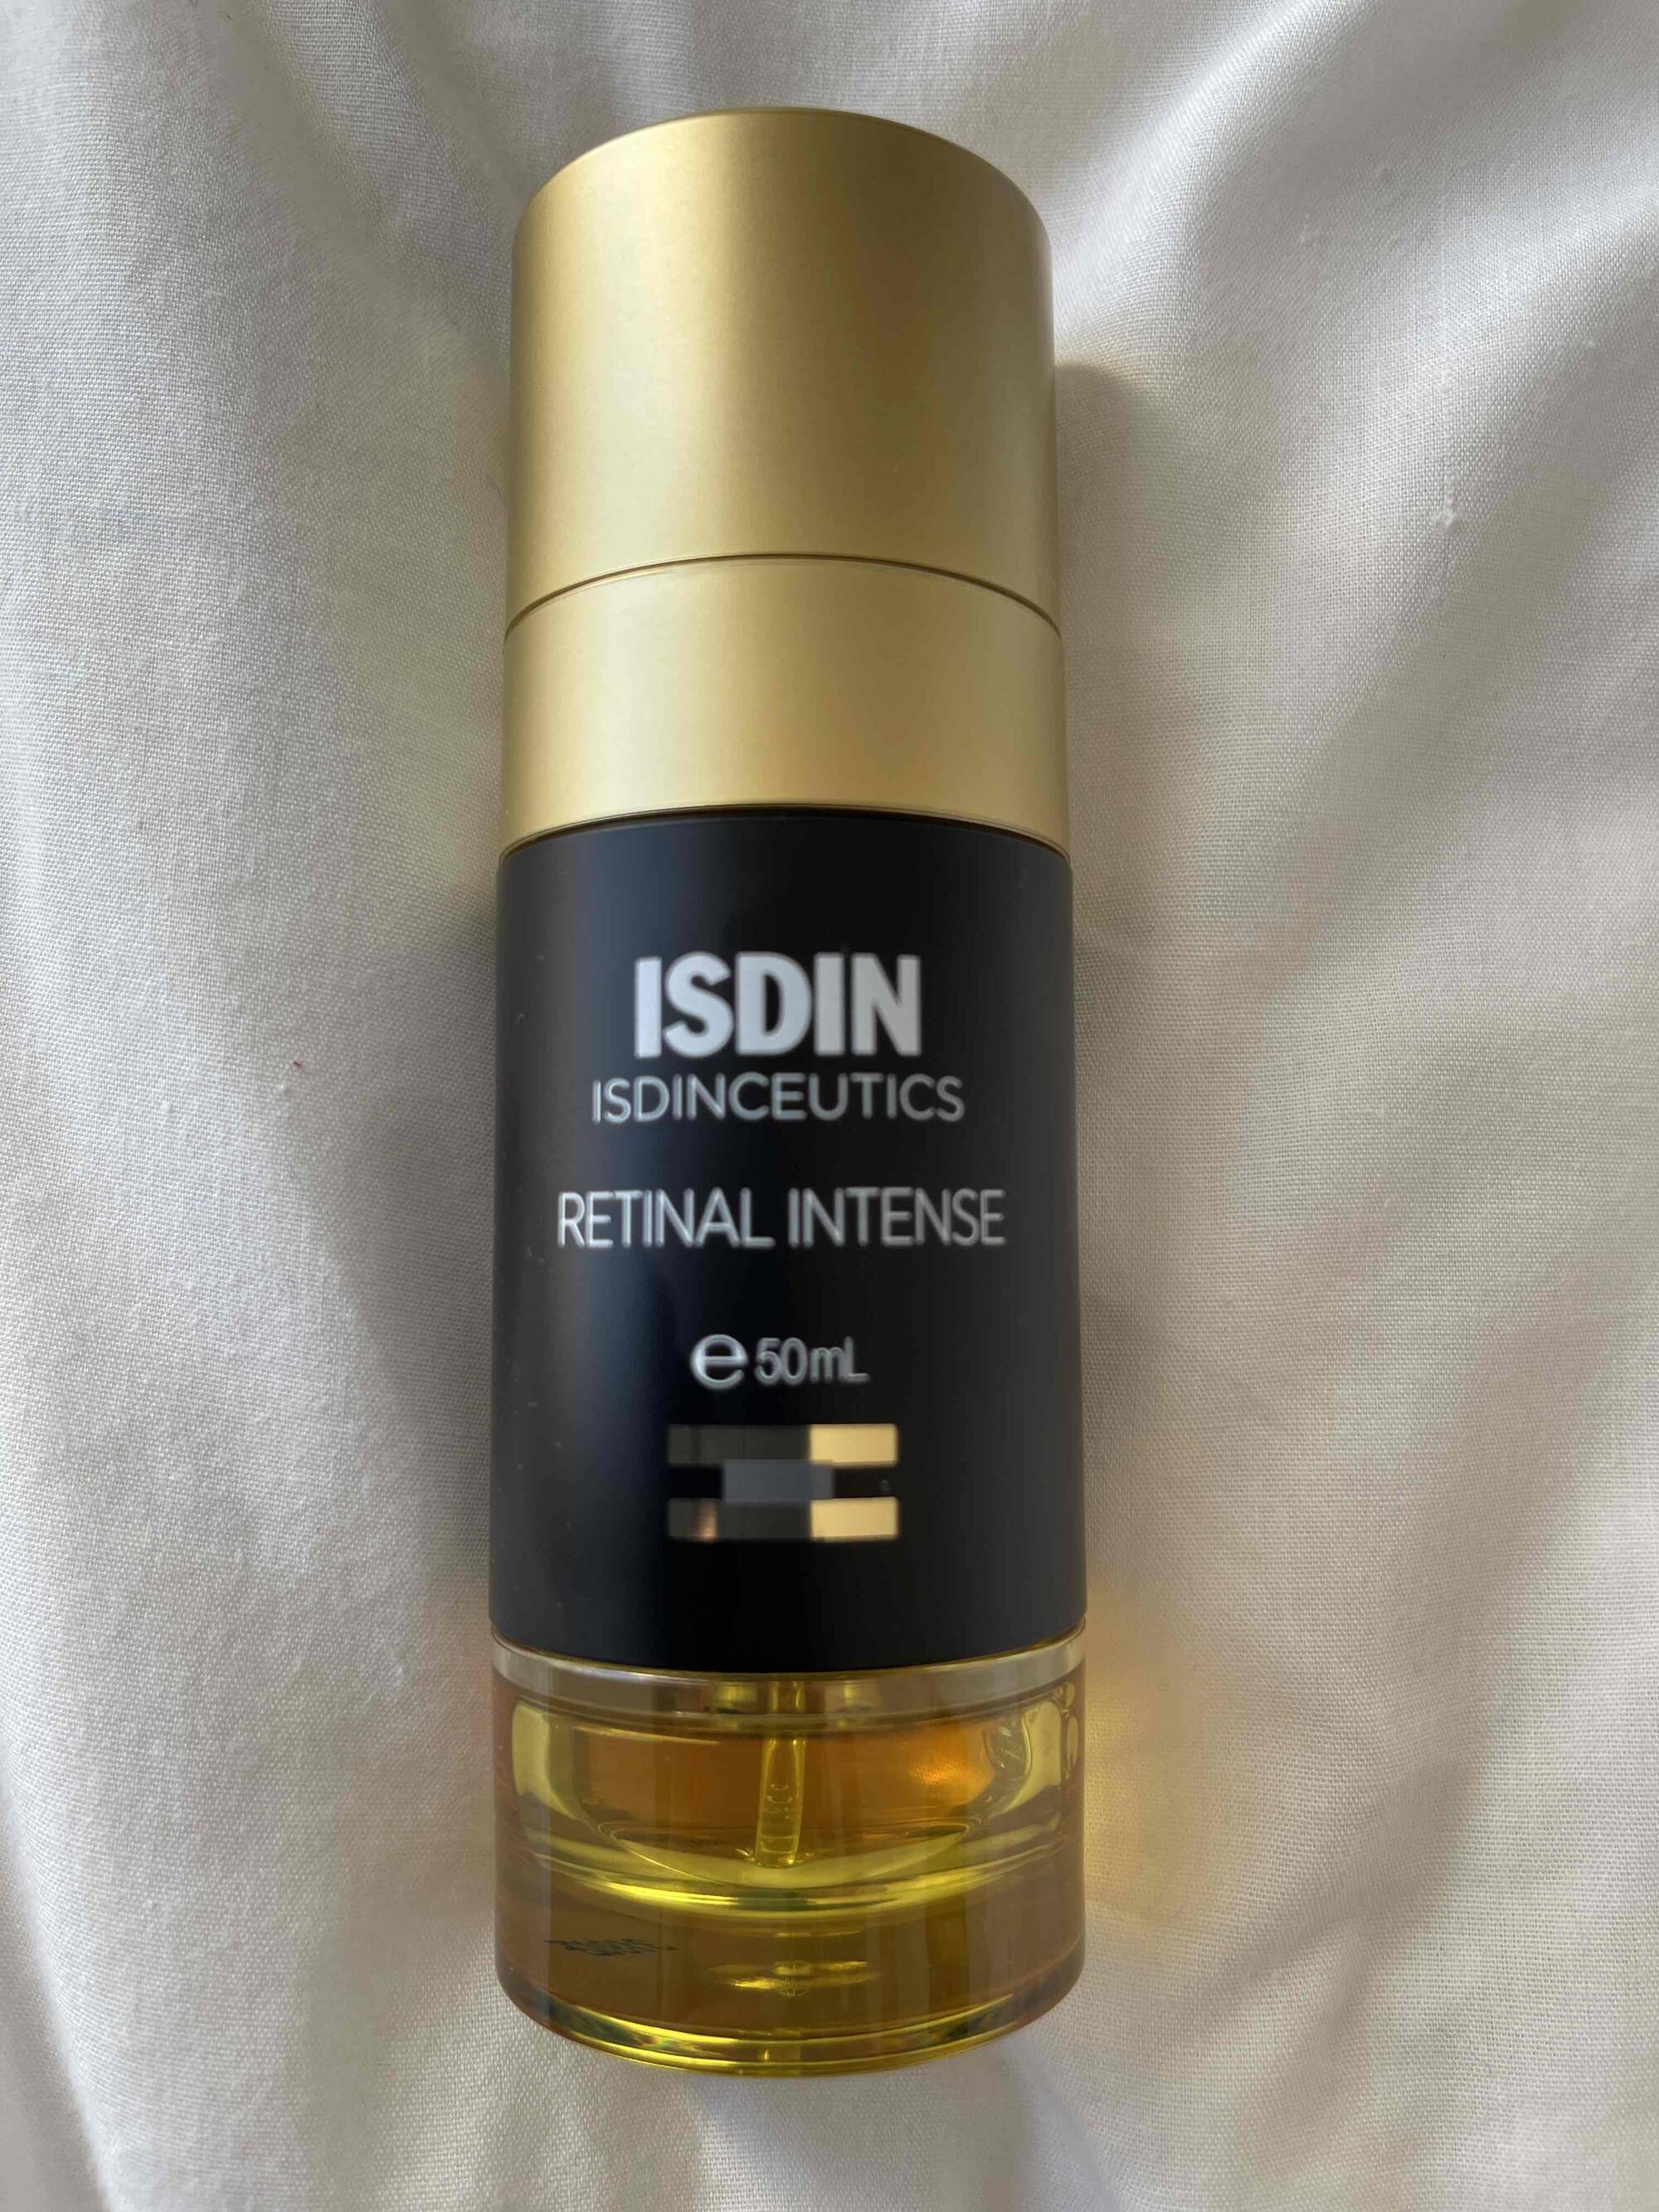 ISDIN - Isdinceutics - Retinal intense